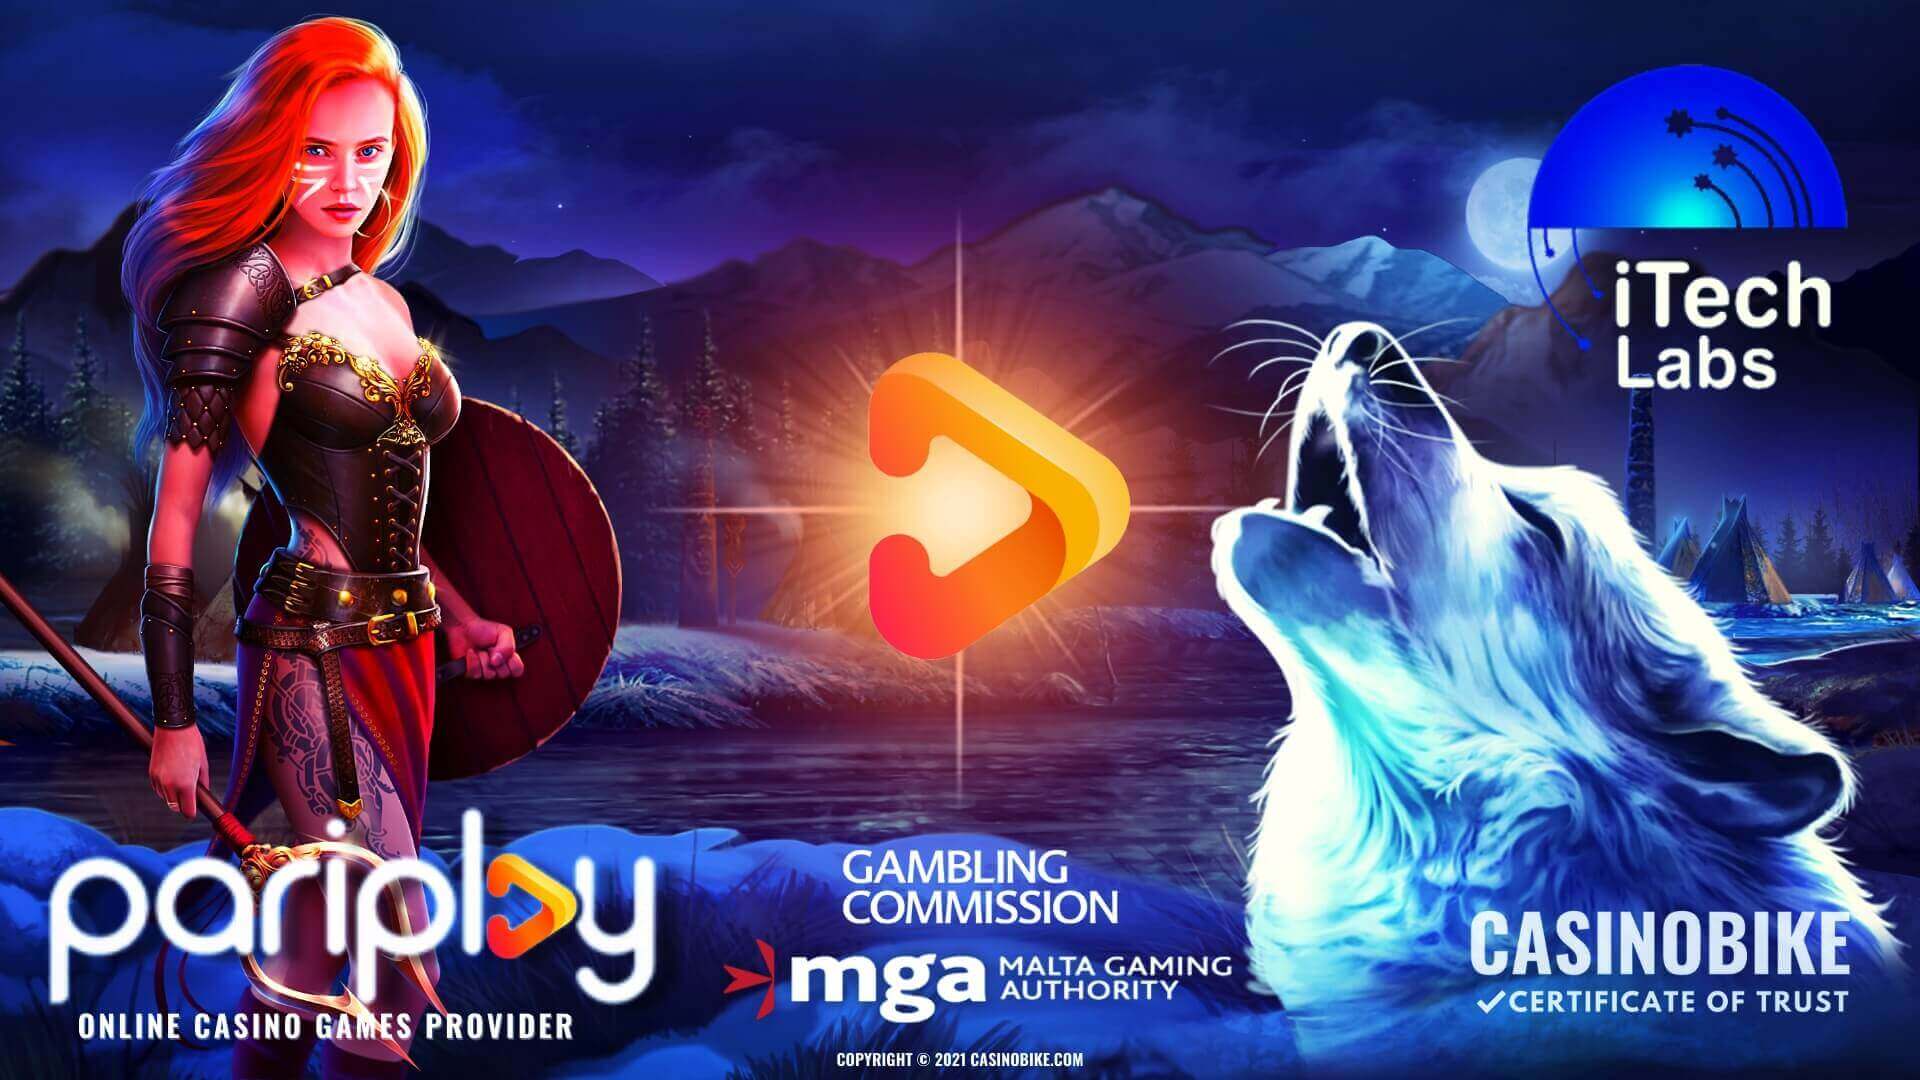 Pariplay Casino Games Provider Review